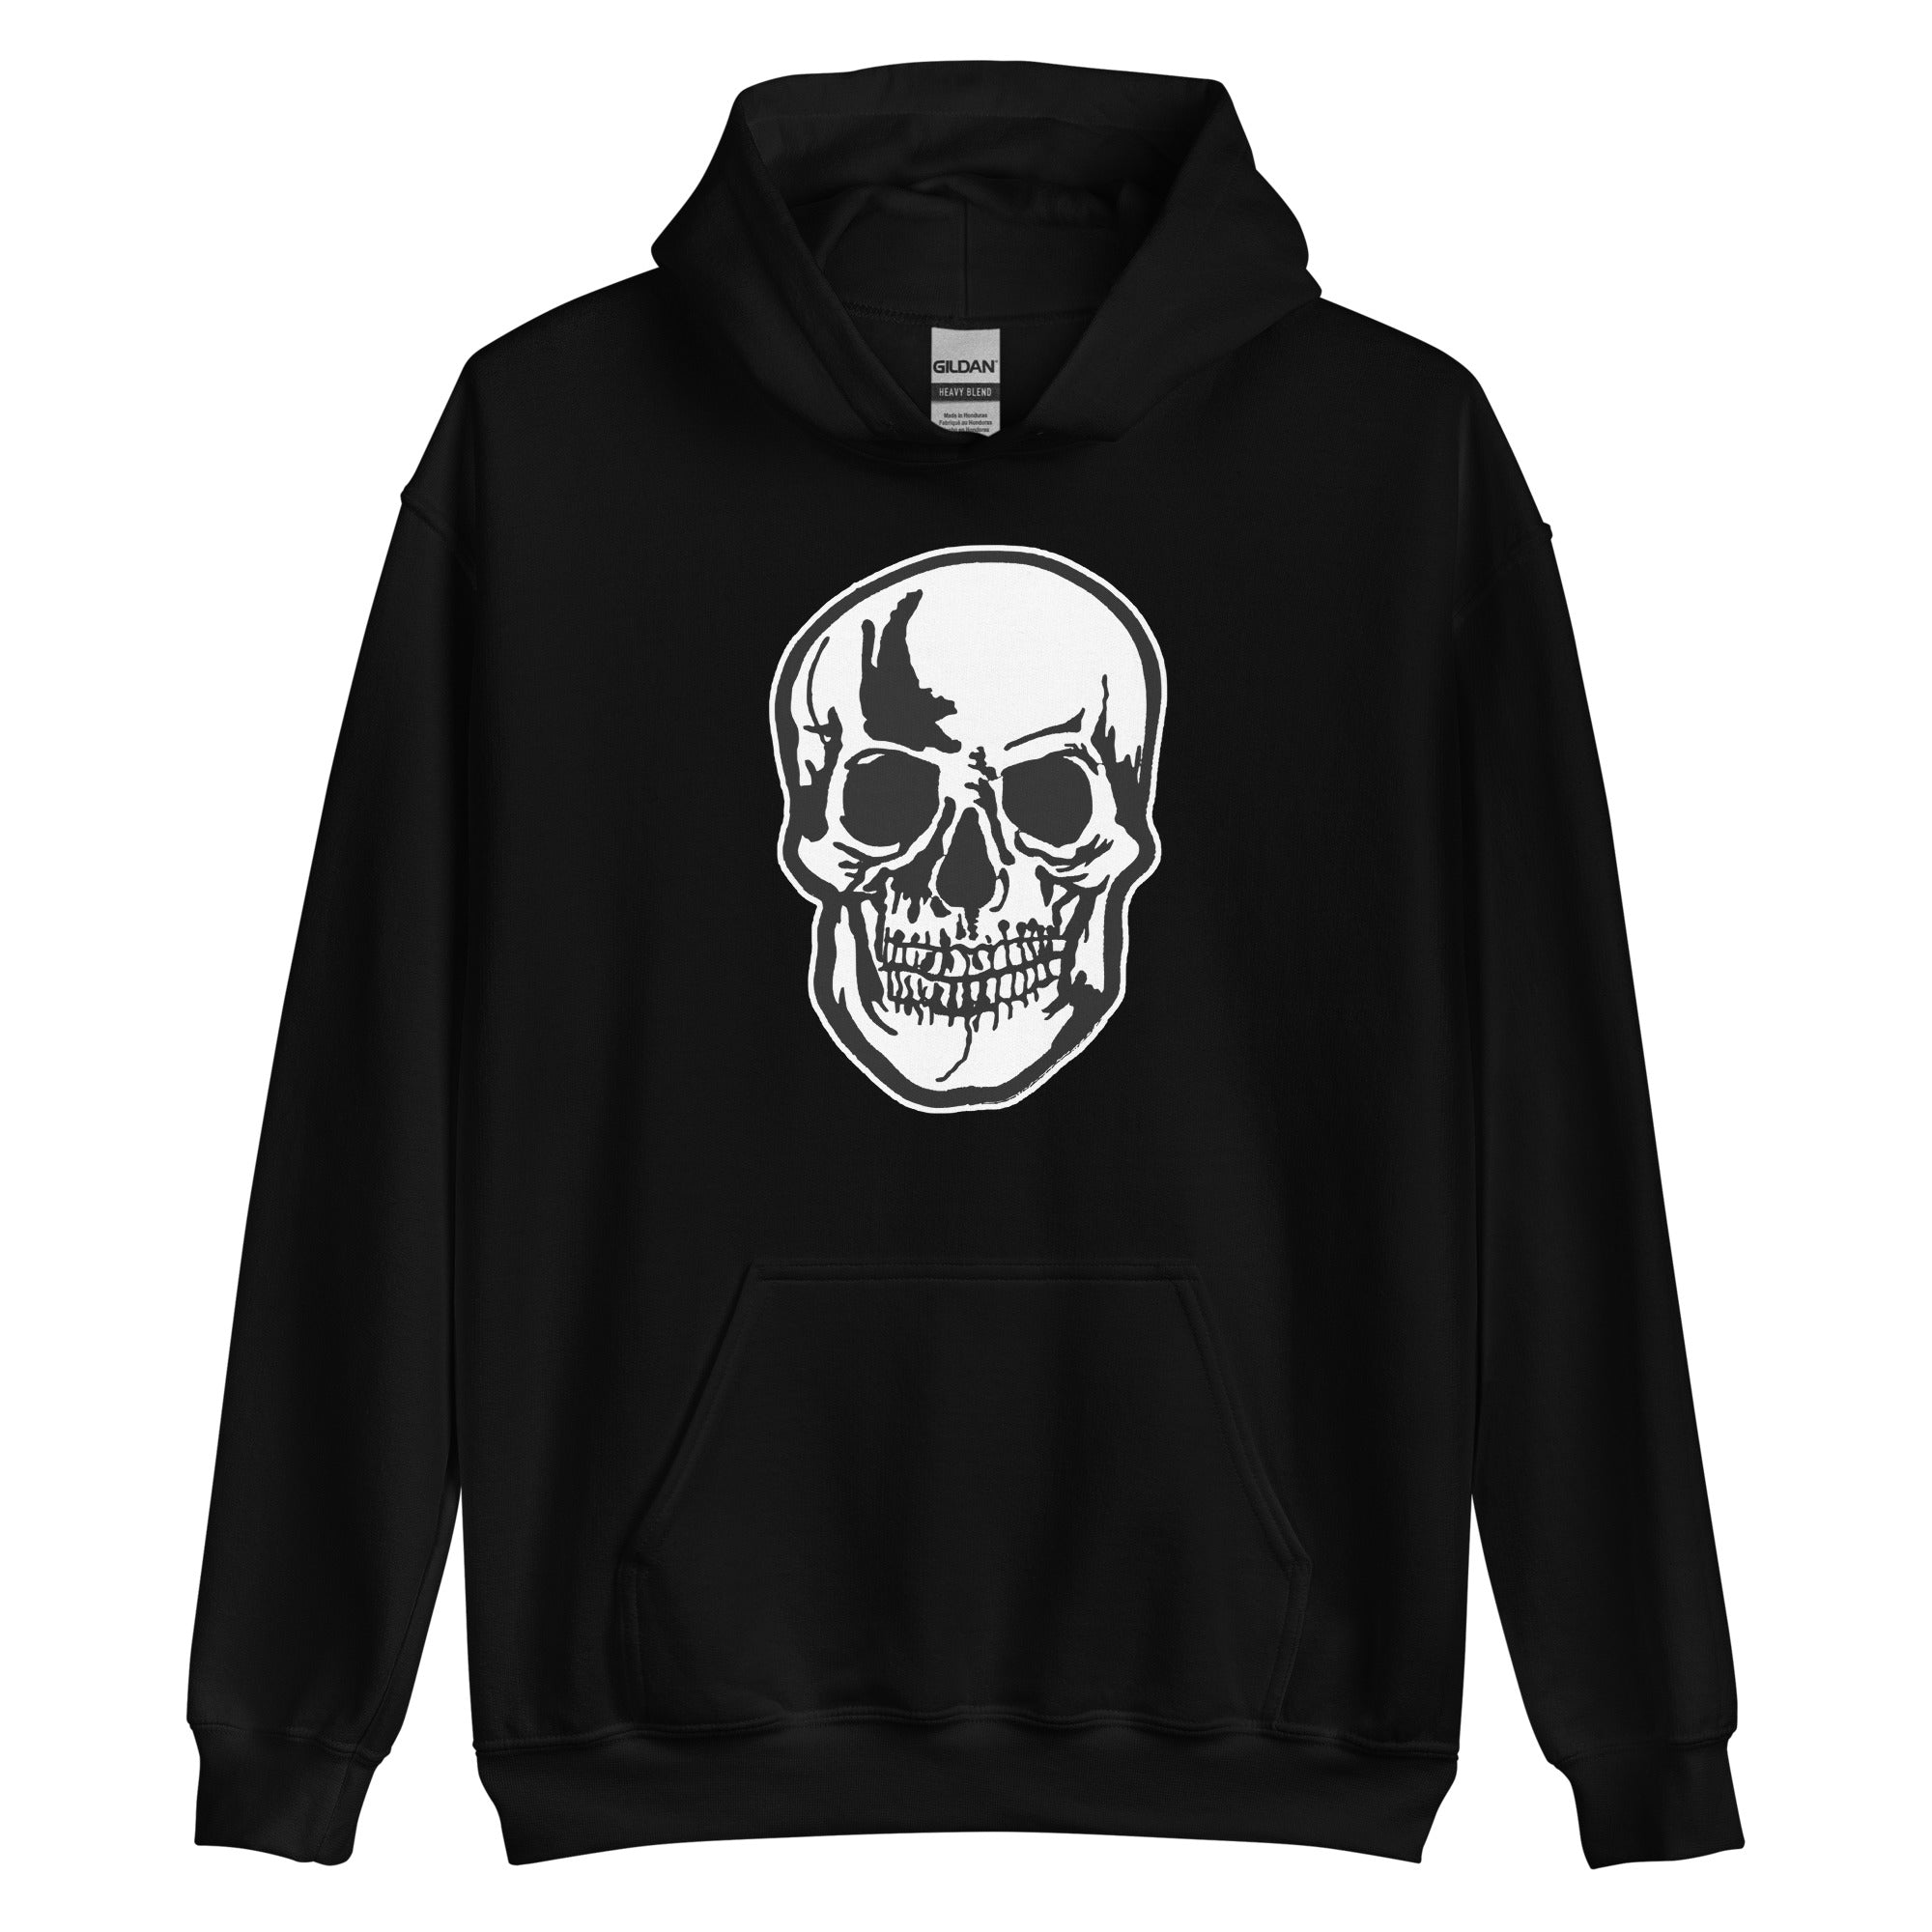 Halloween Oddities Human Skull Hoodie Sweatshirt